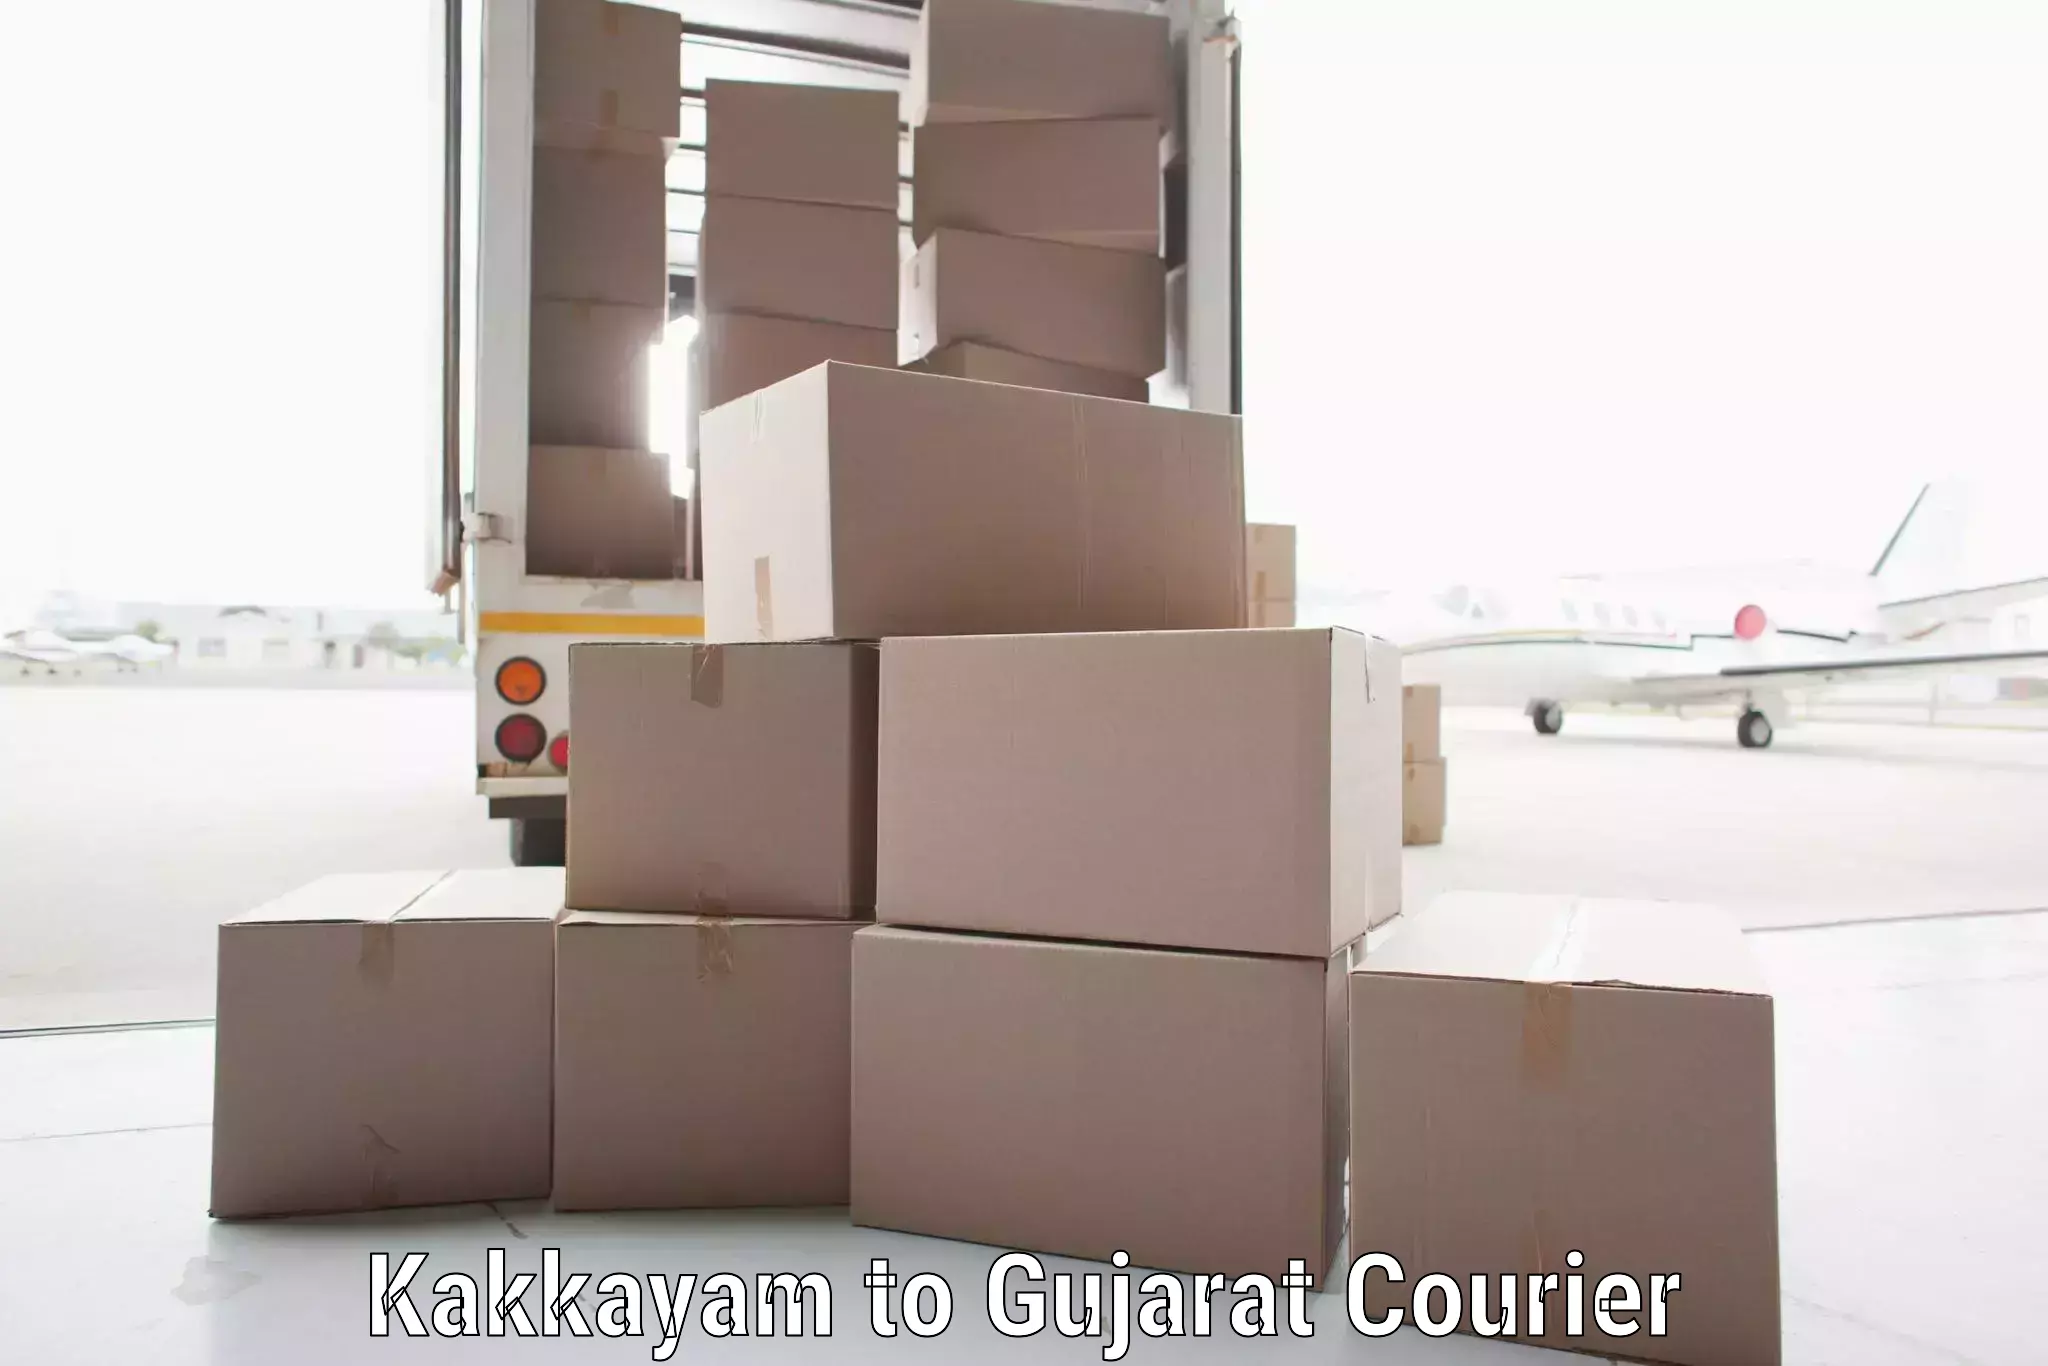 International parcel service Kakkayam to Gandhidham